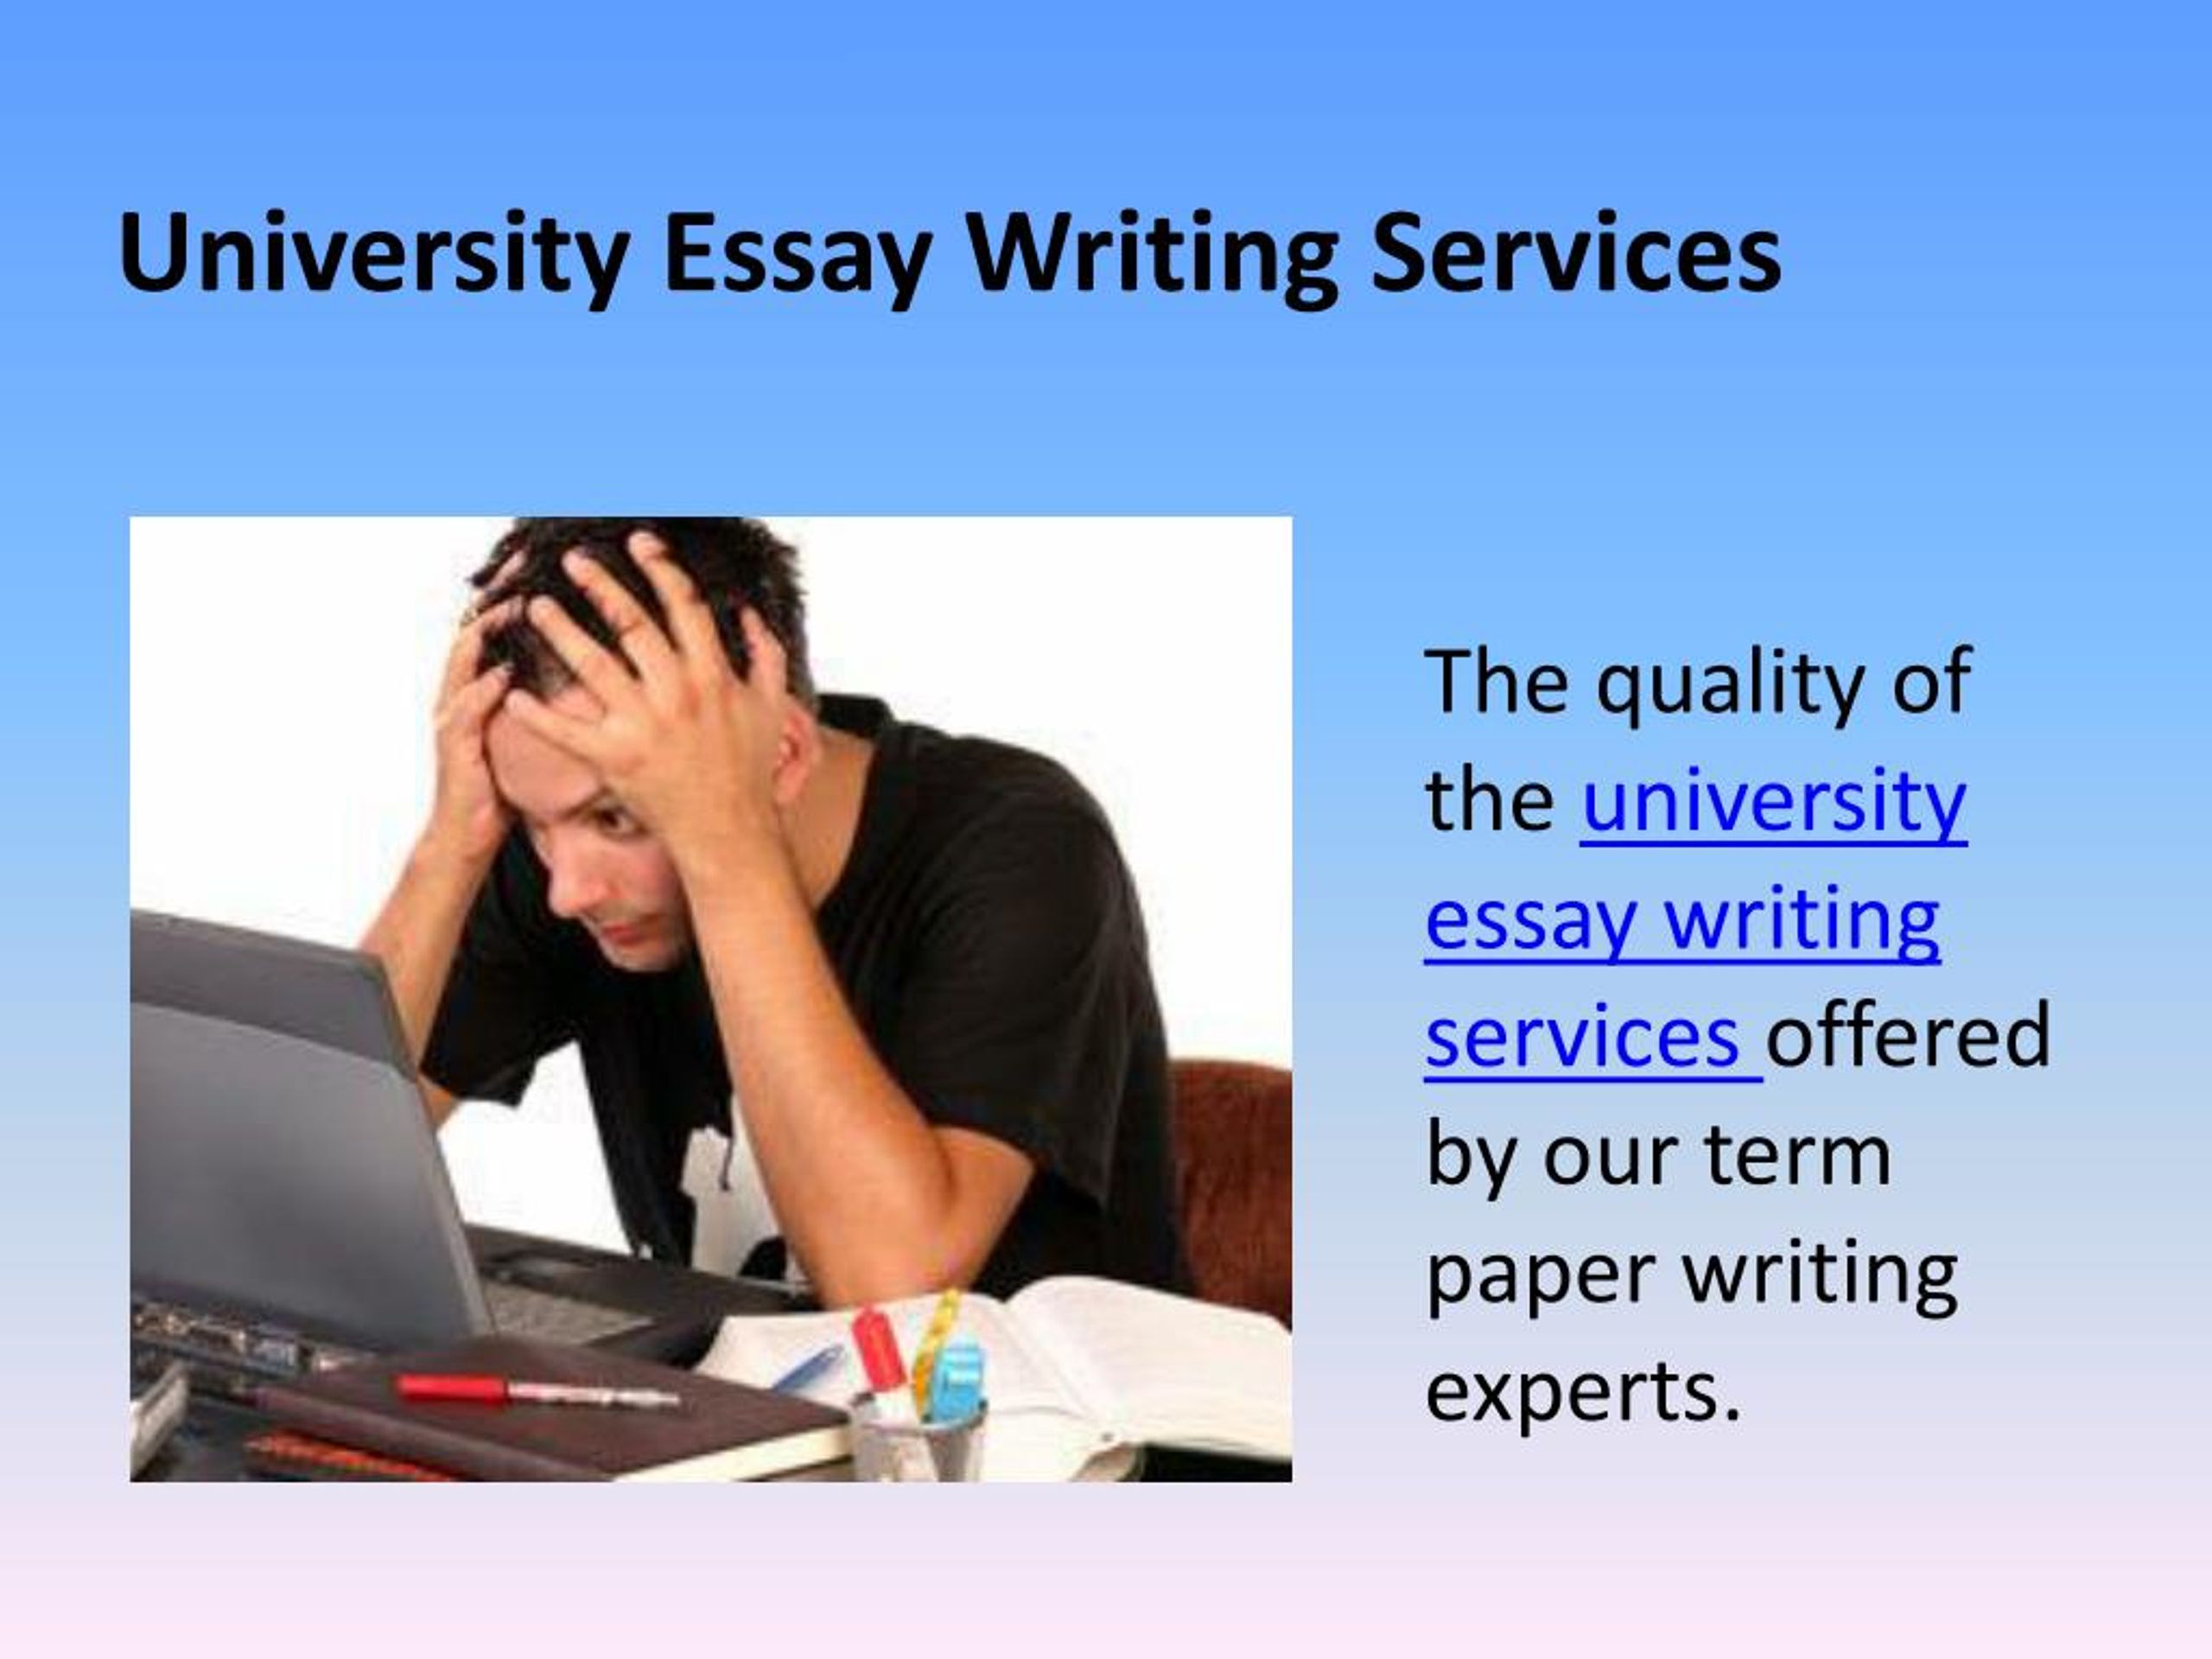 University essay writing services